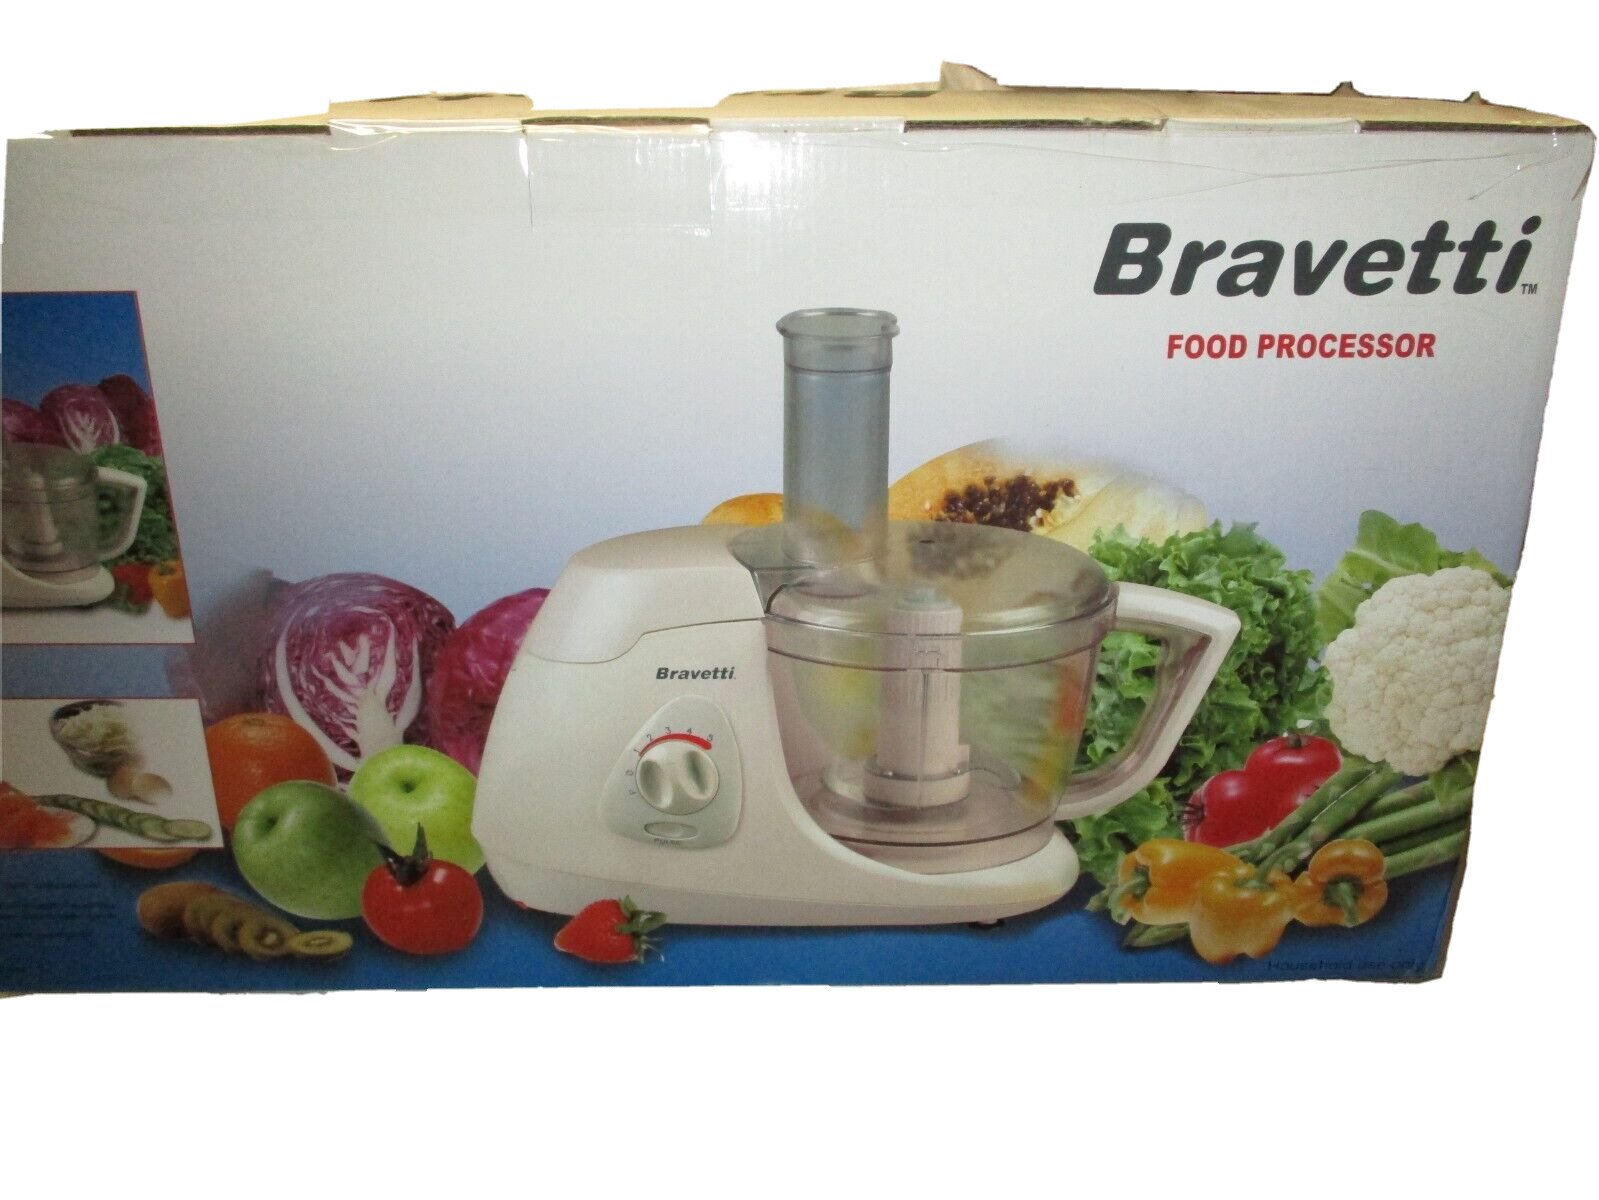 Bravetti Food Processor Model EP119 with 5 Programs